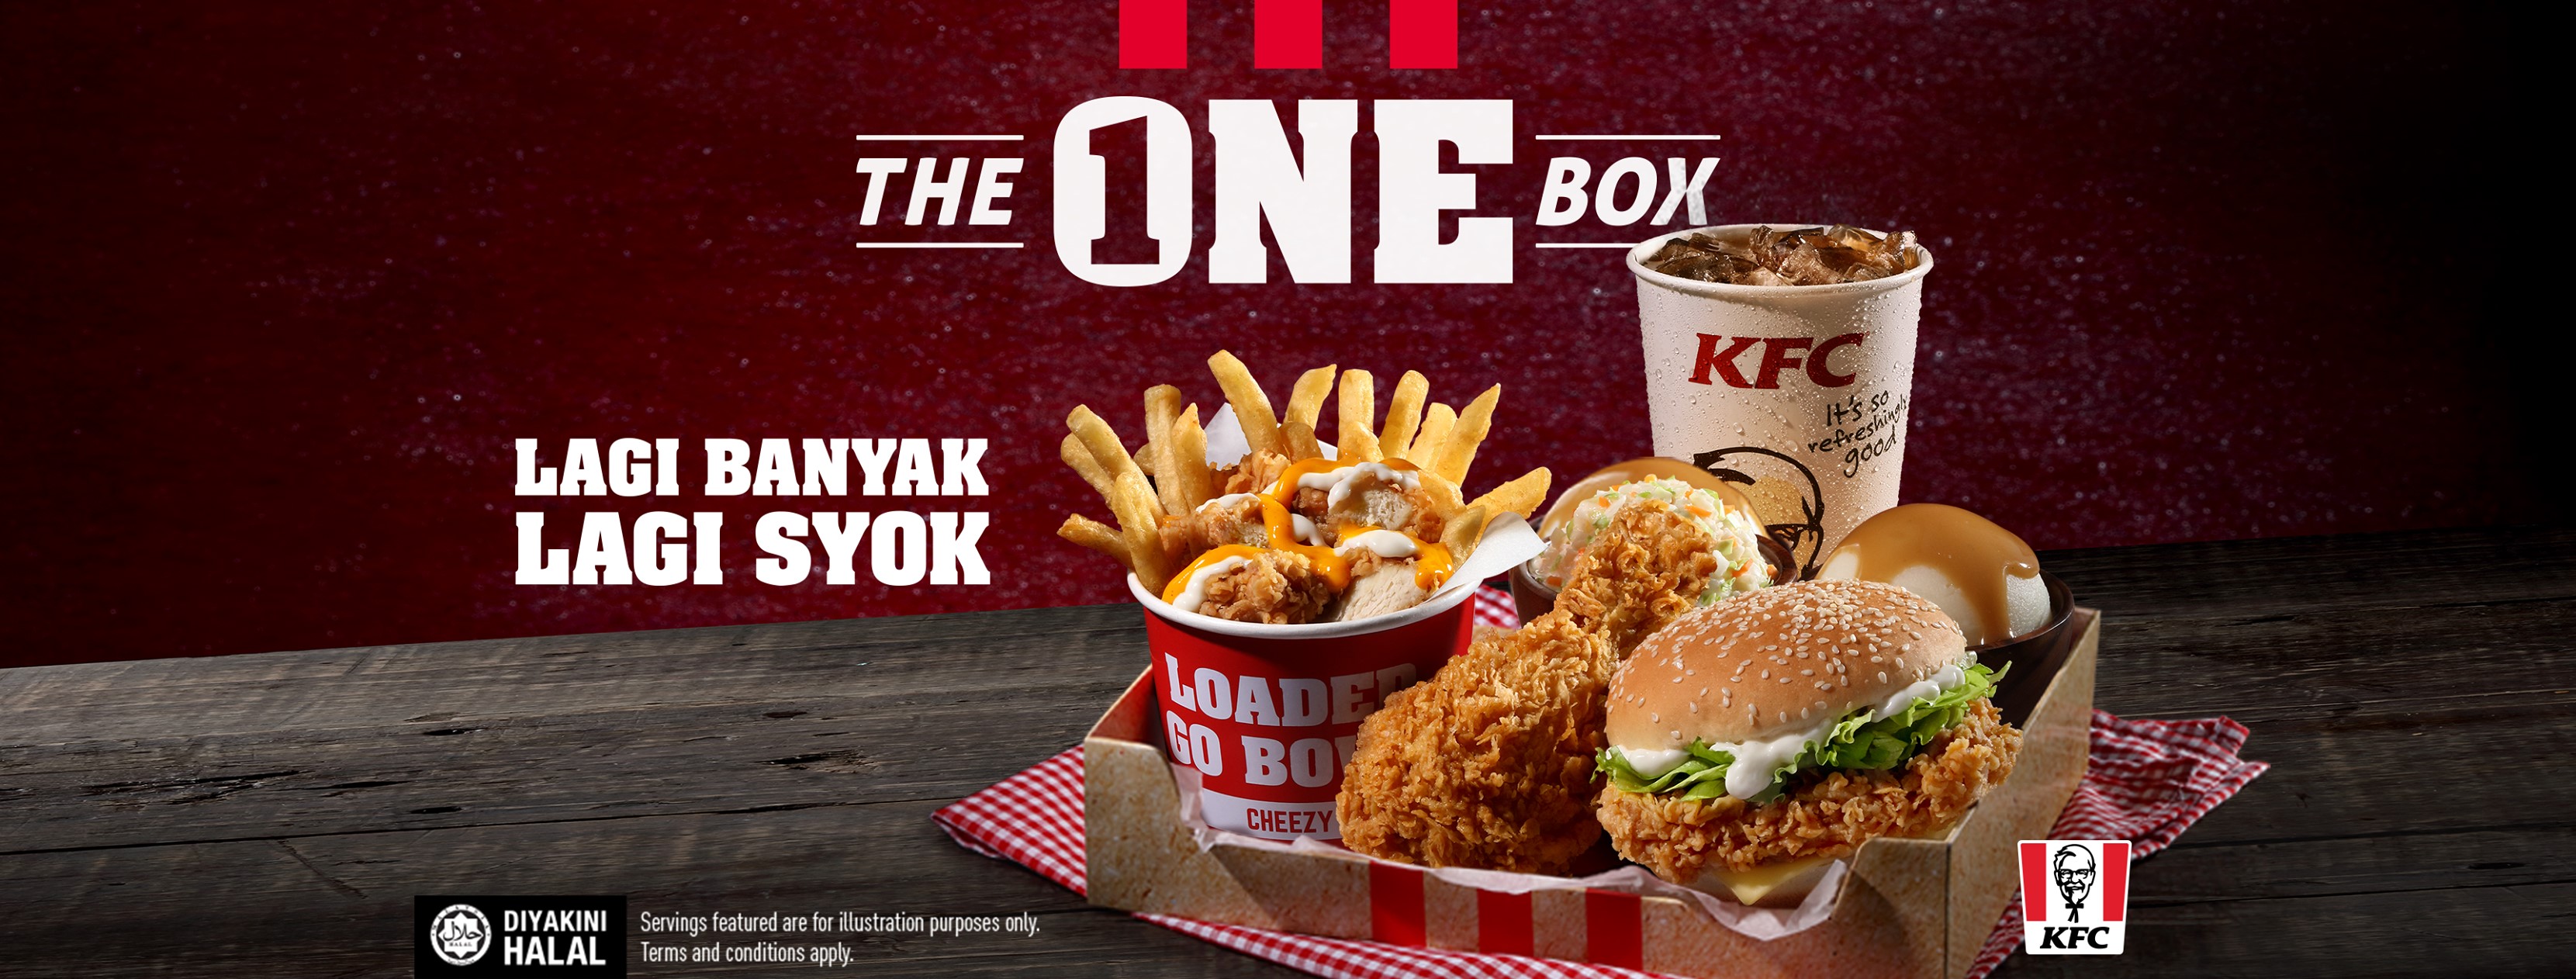 KFC 即日起推出全新 THE ONE BOX 超级套餐！绝对能让你吃饱饱！ – LEESHARING